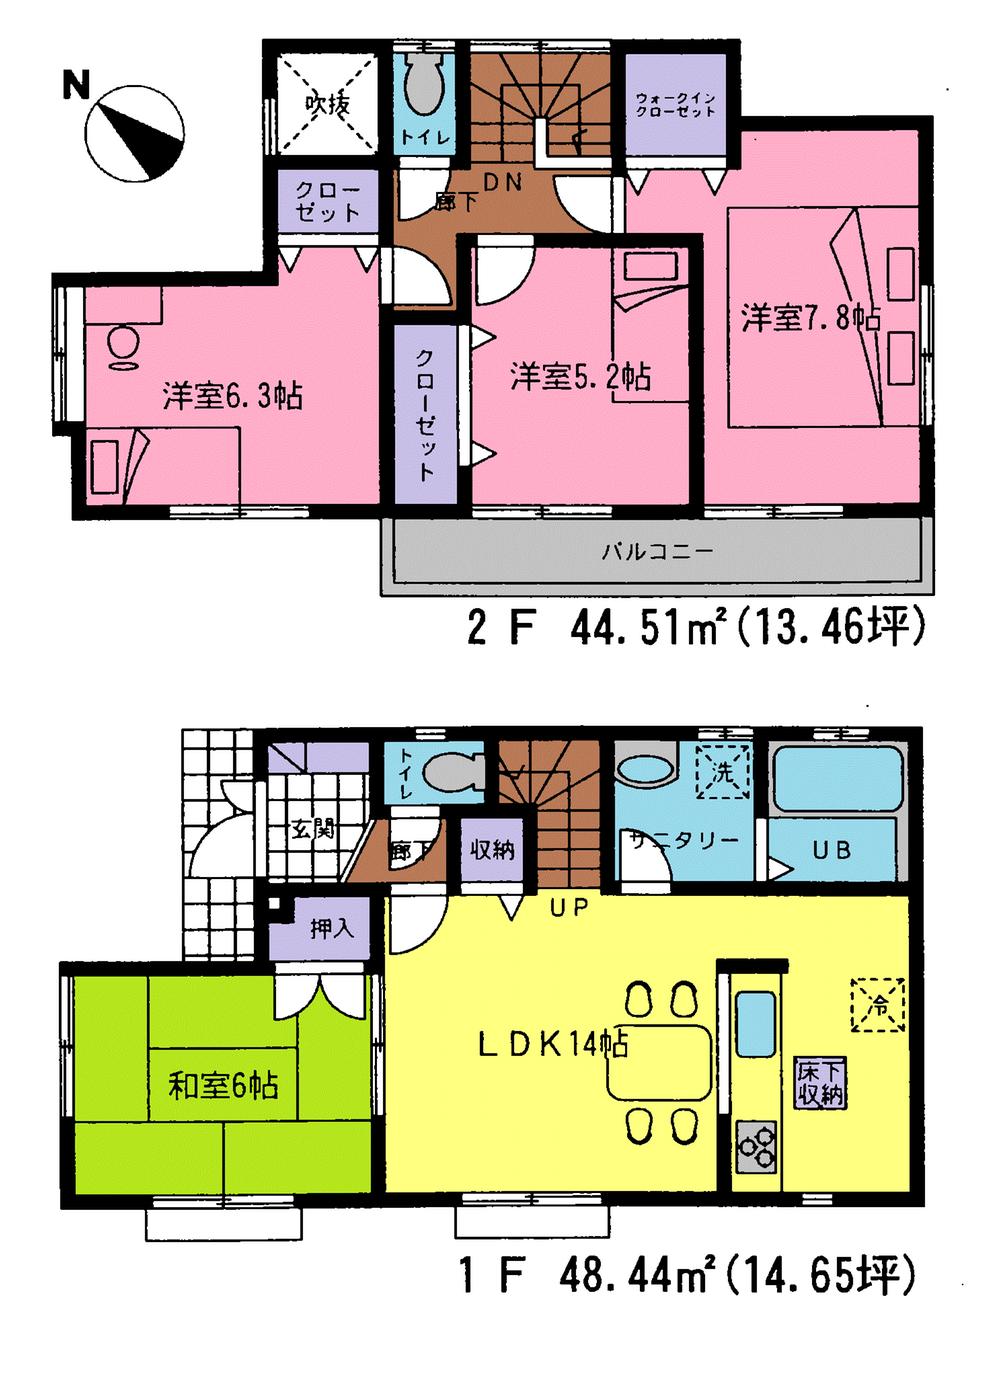 Floor plan. (Building 2), Price 18,800,000 yen, 4LDK+S, Land area 161.21 sq m , Building area 92.95 sq m